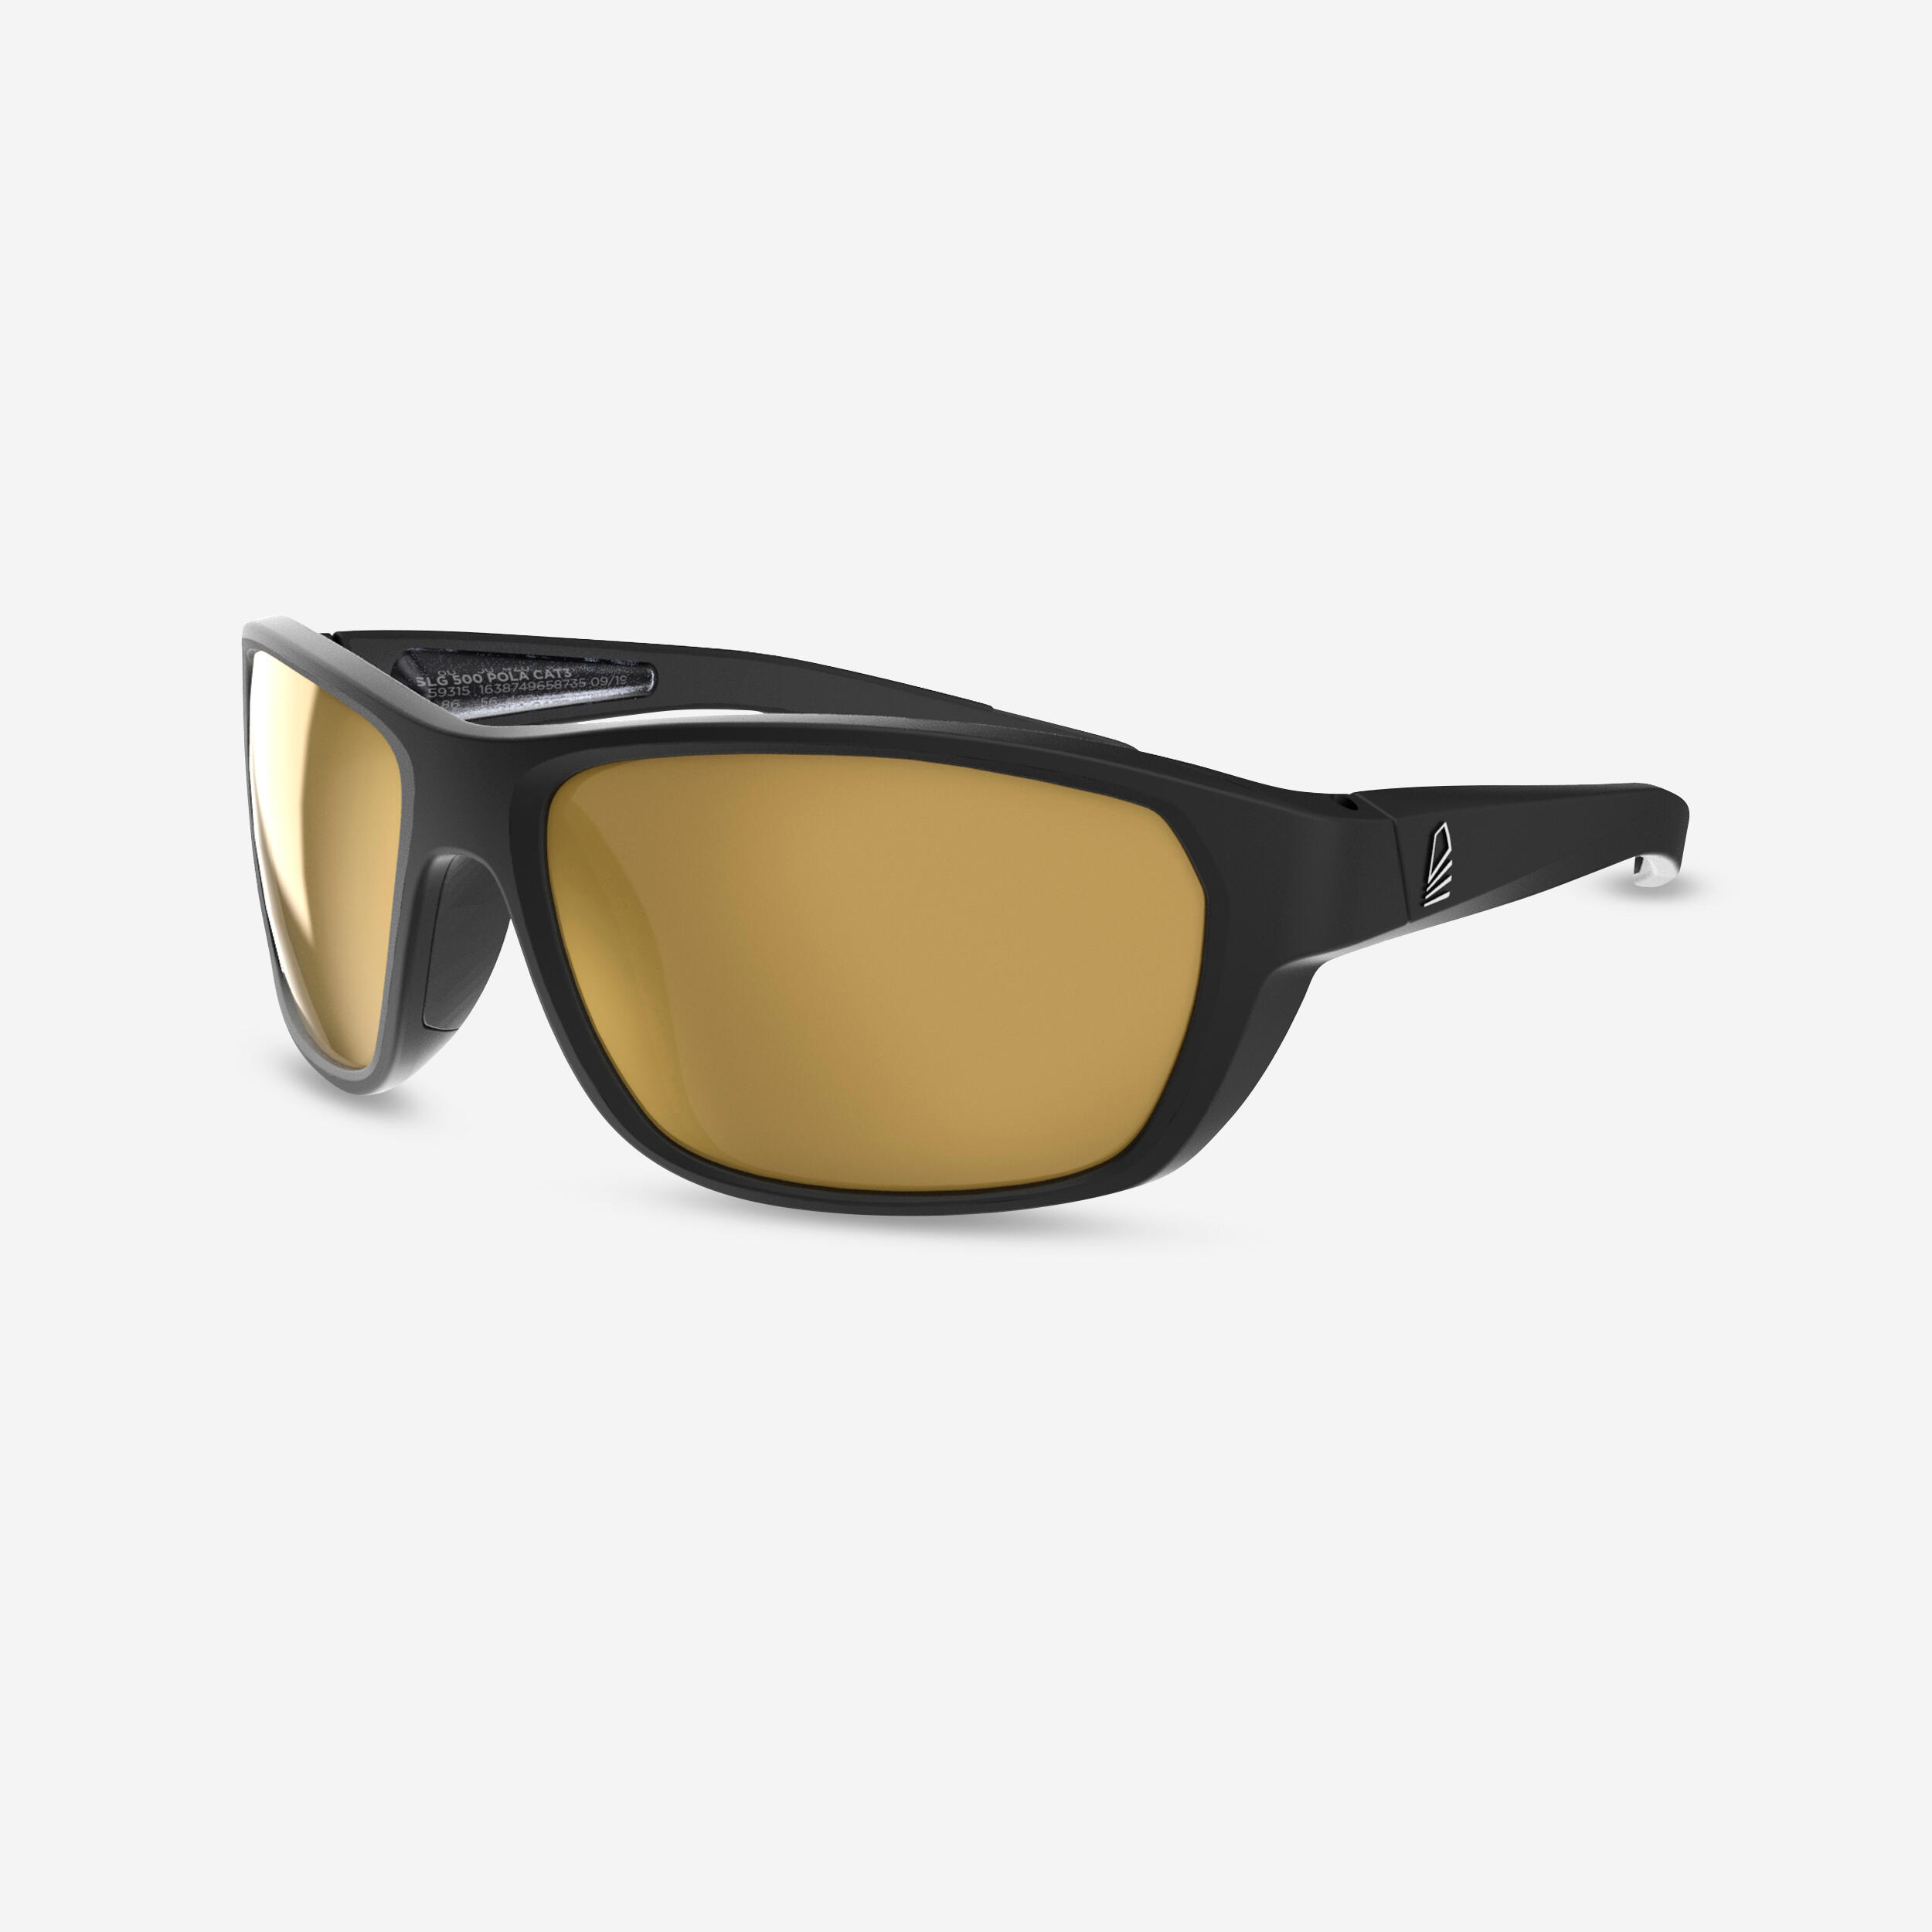 TRIBORD Adult's sailing floating polarised sunglasses 500 size S - Black Gold